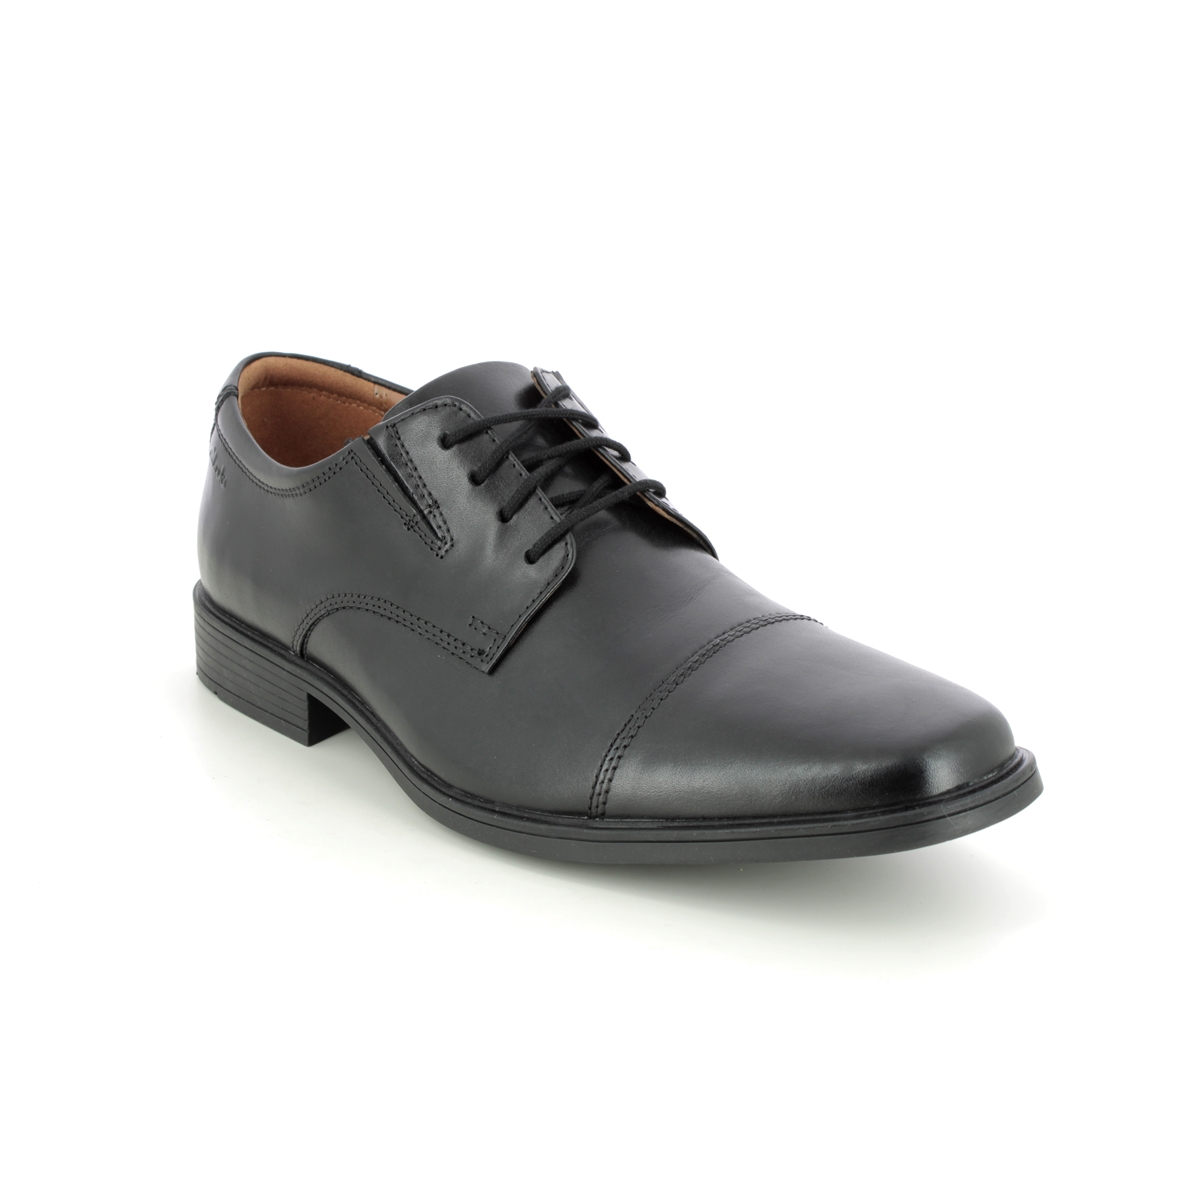 Clarks Tilden Cap Black Leather Mens Formal Shoes 103097G In Size 9 In Plain Black Leather G Width Fitting